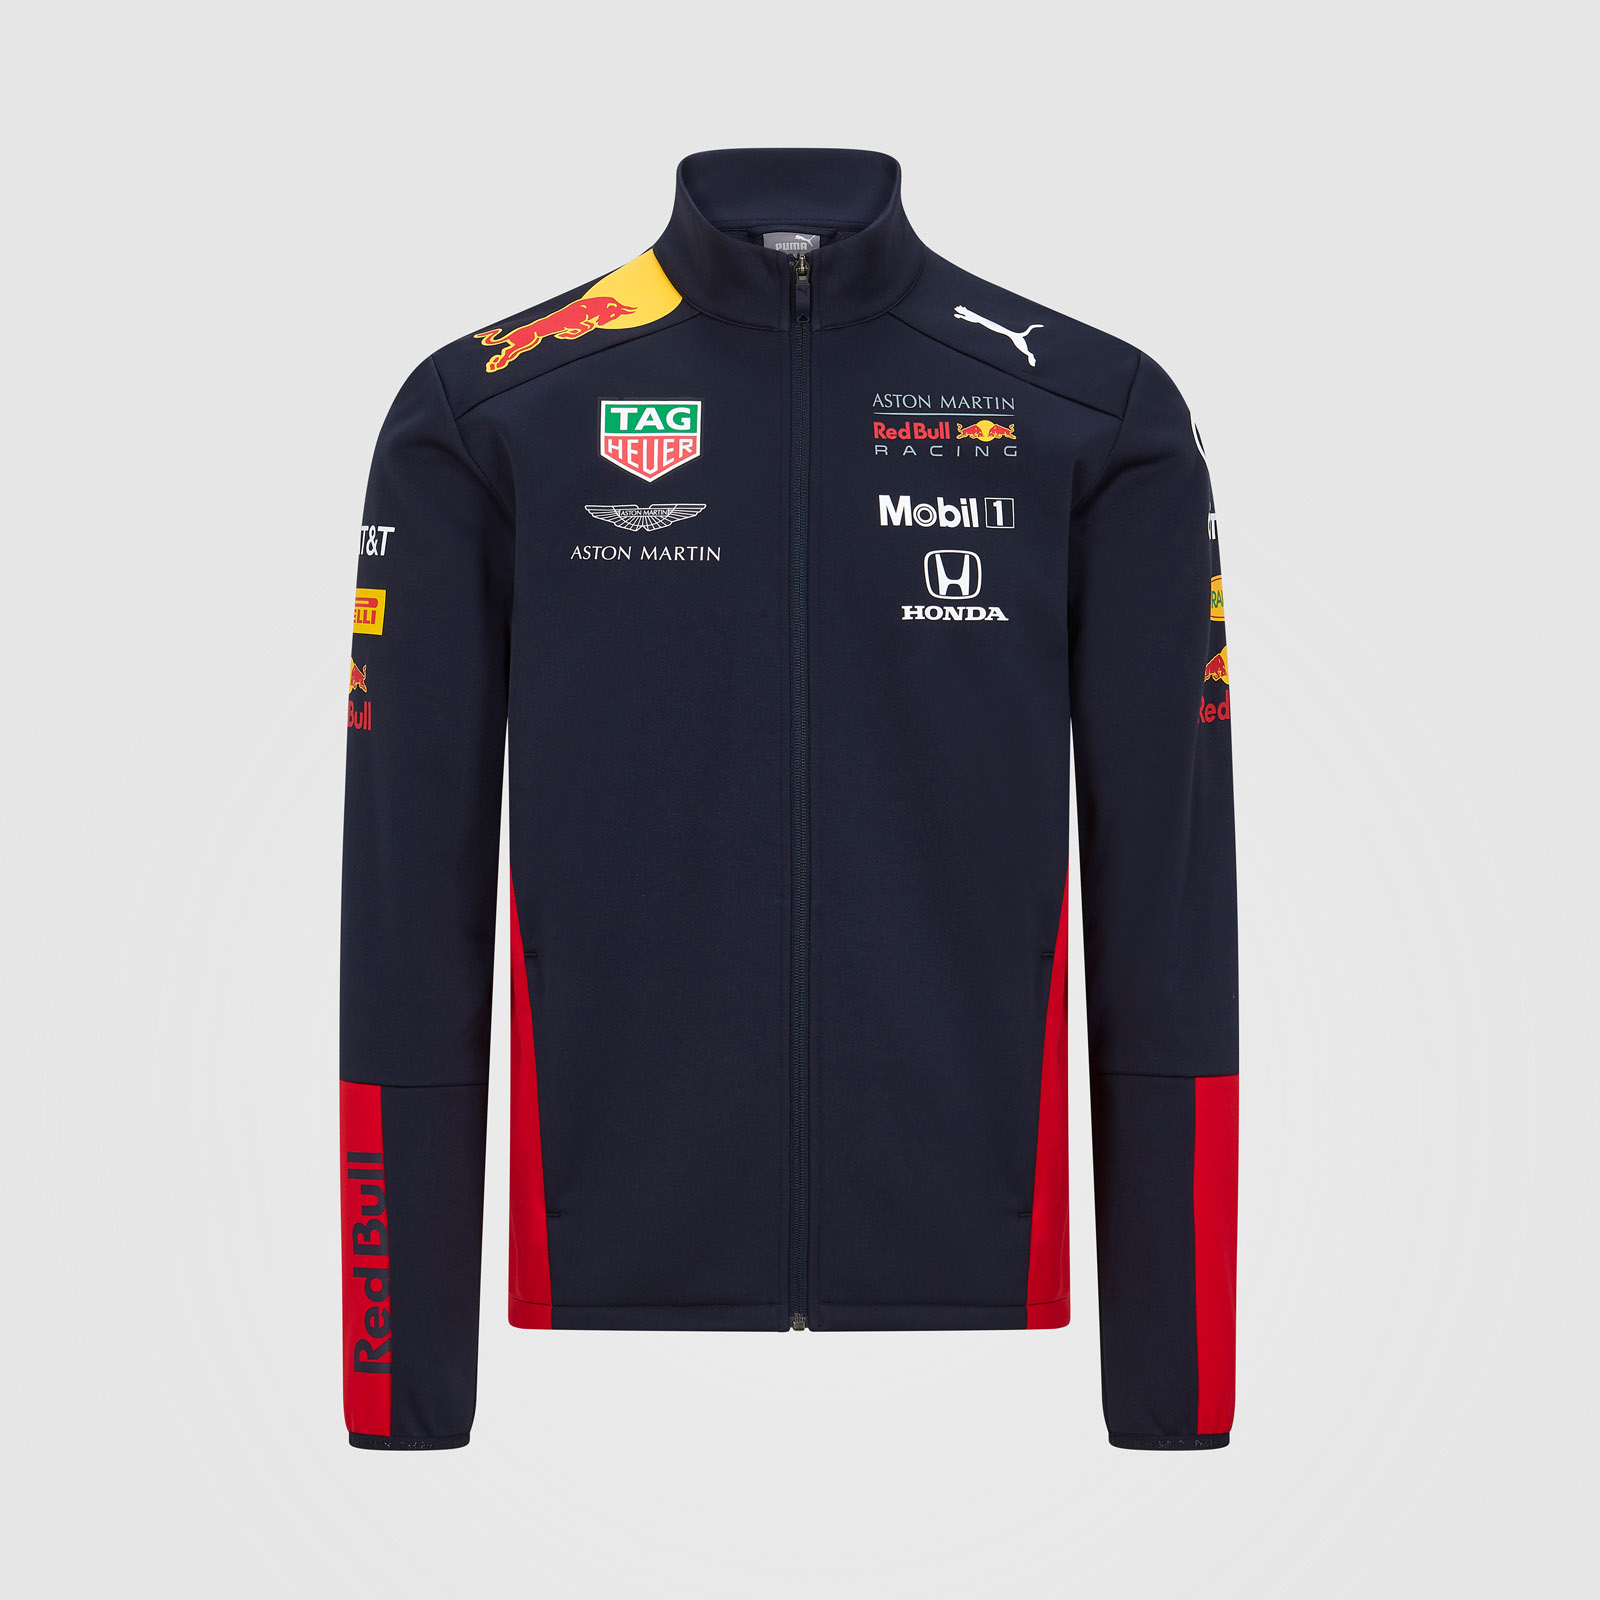 2020 Team Polo - Red Bull Racing